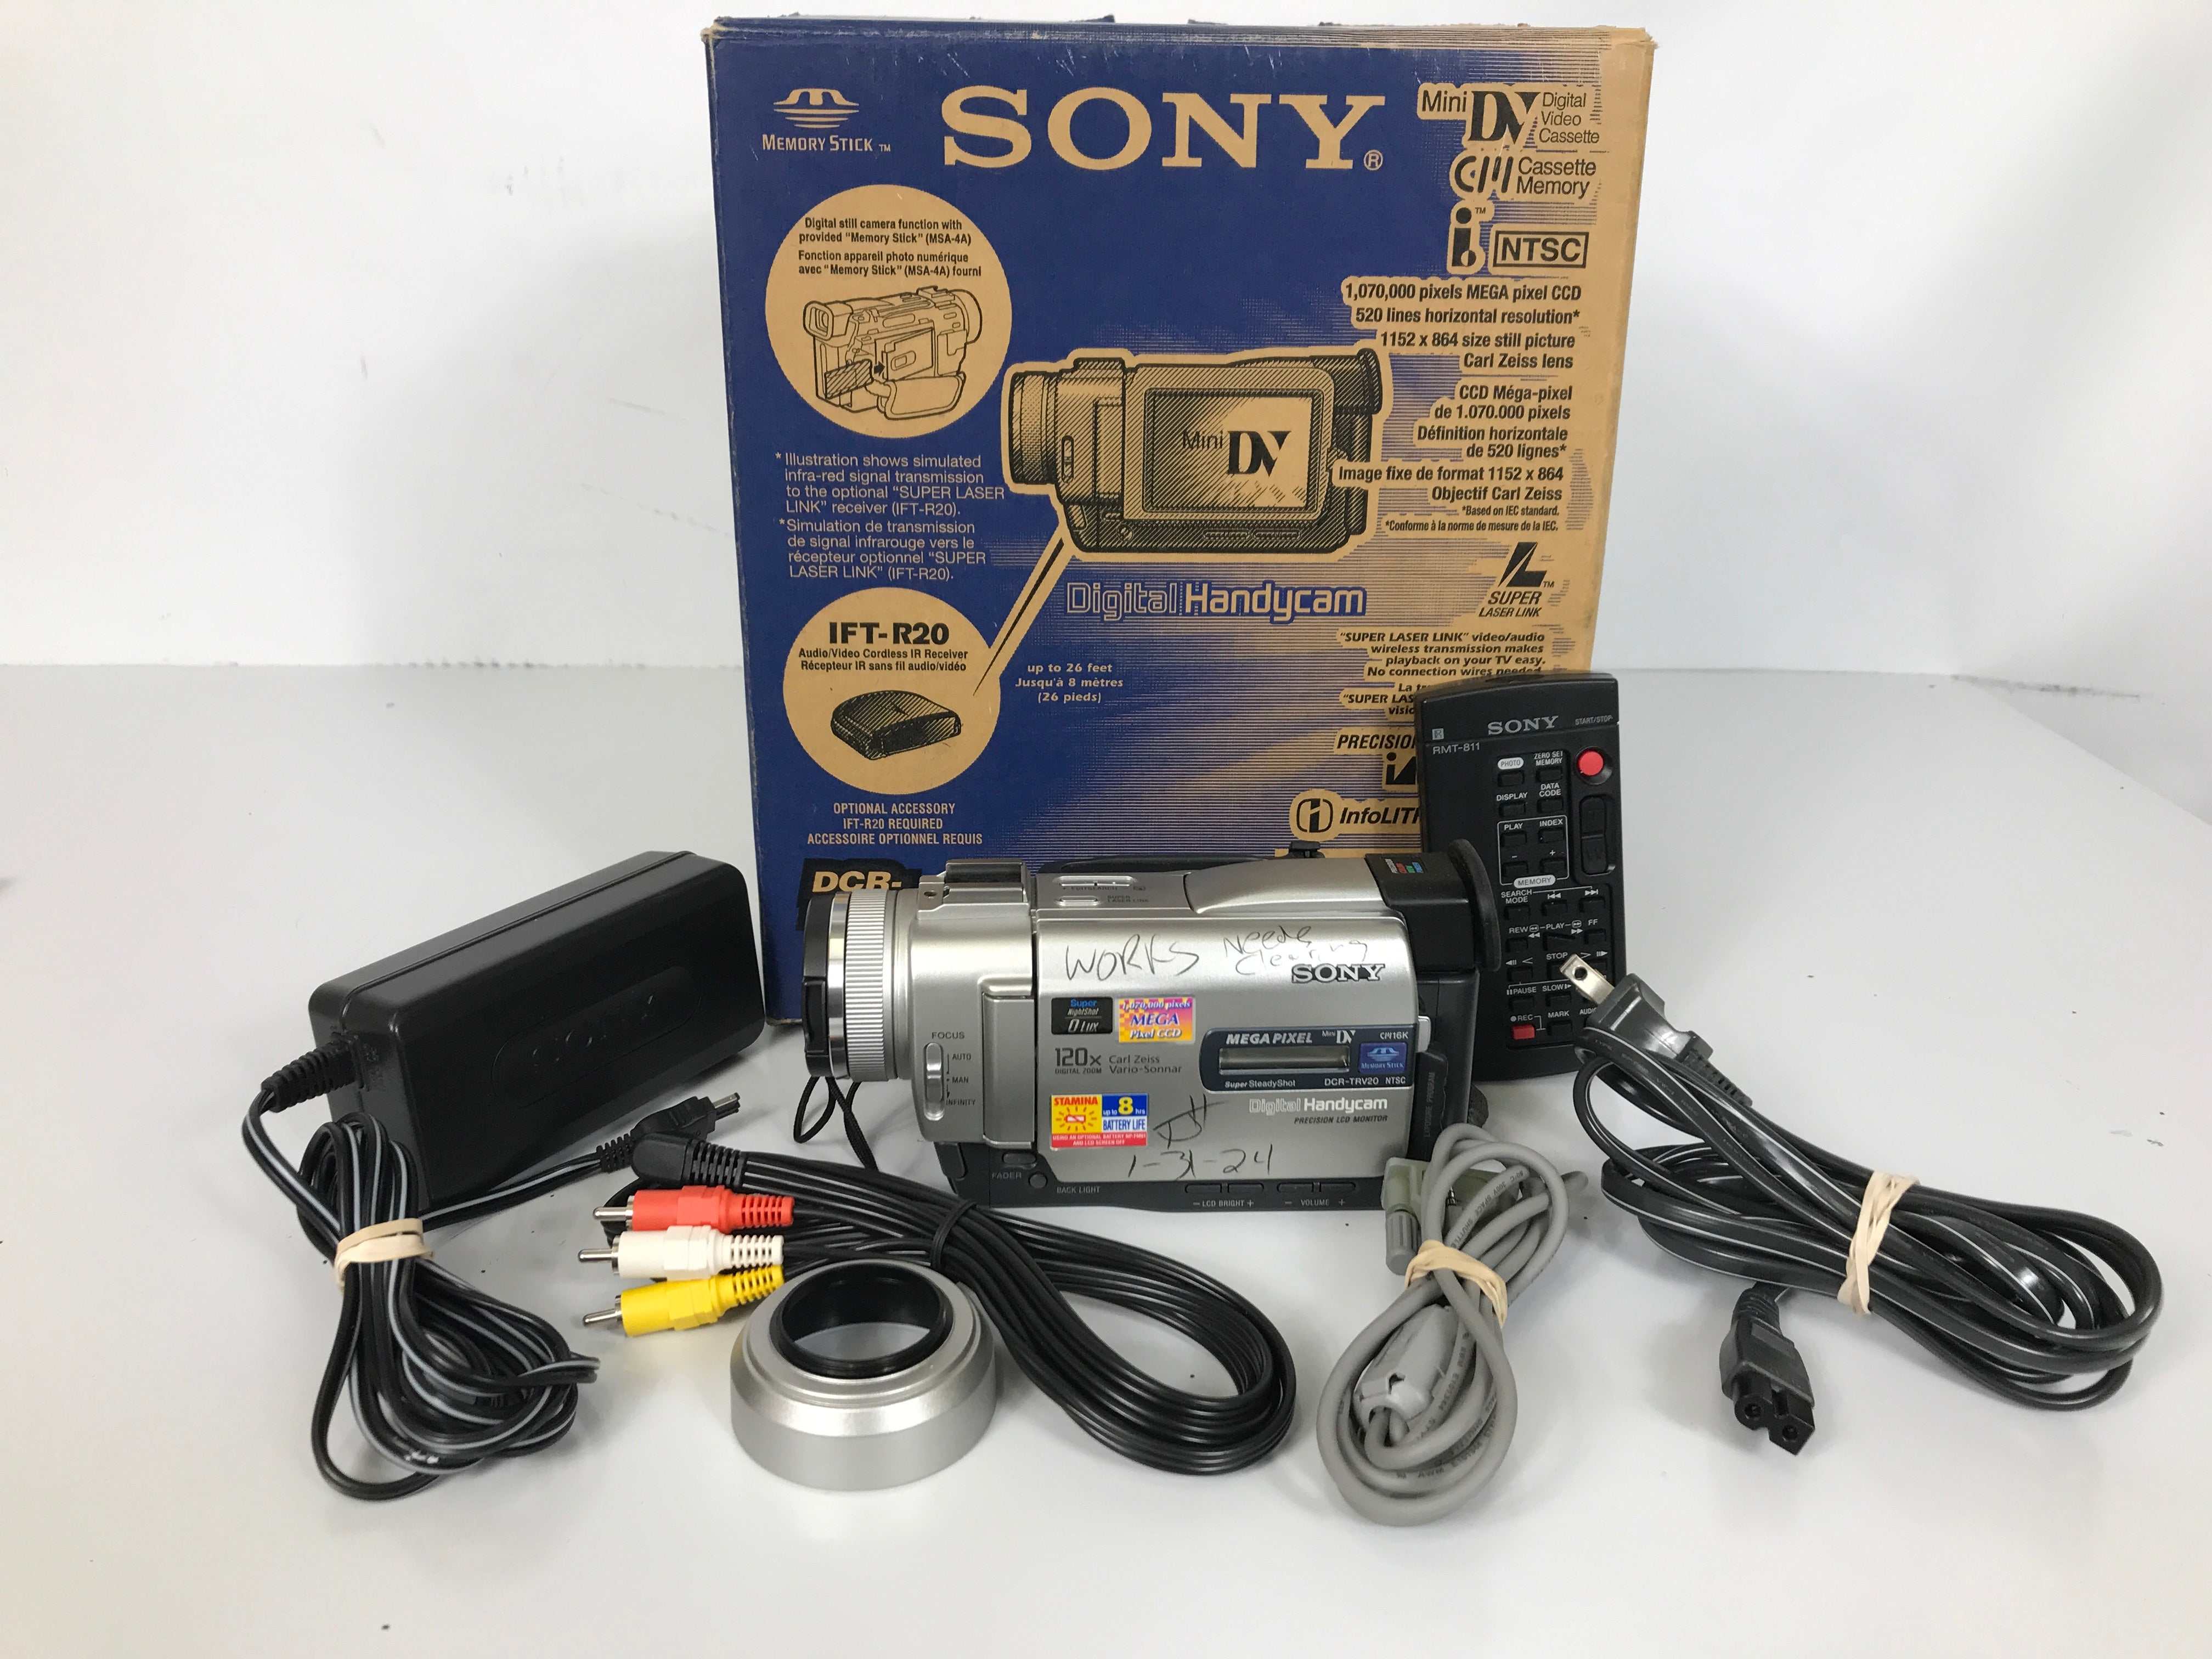 Sony DCR-TRV20 Handycam MiniDV Digital Video Camcorder